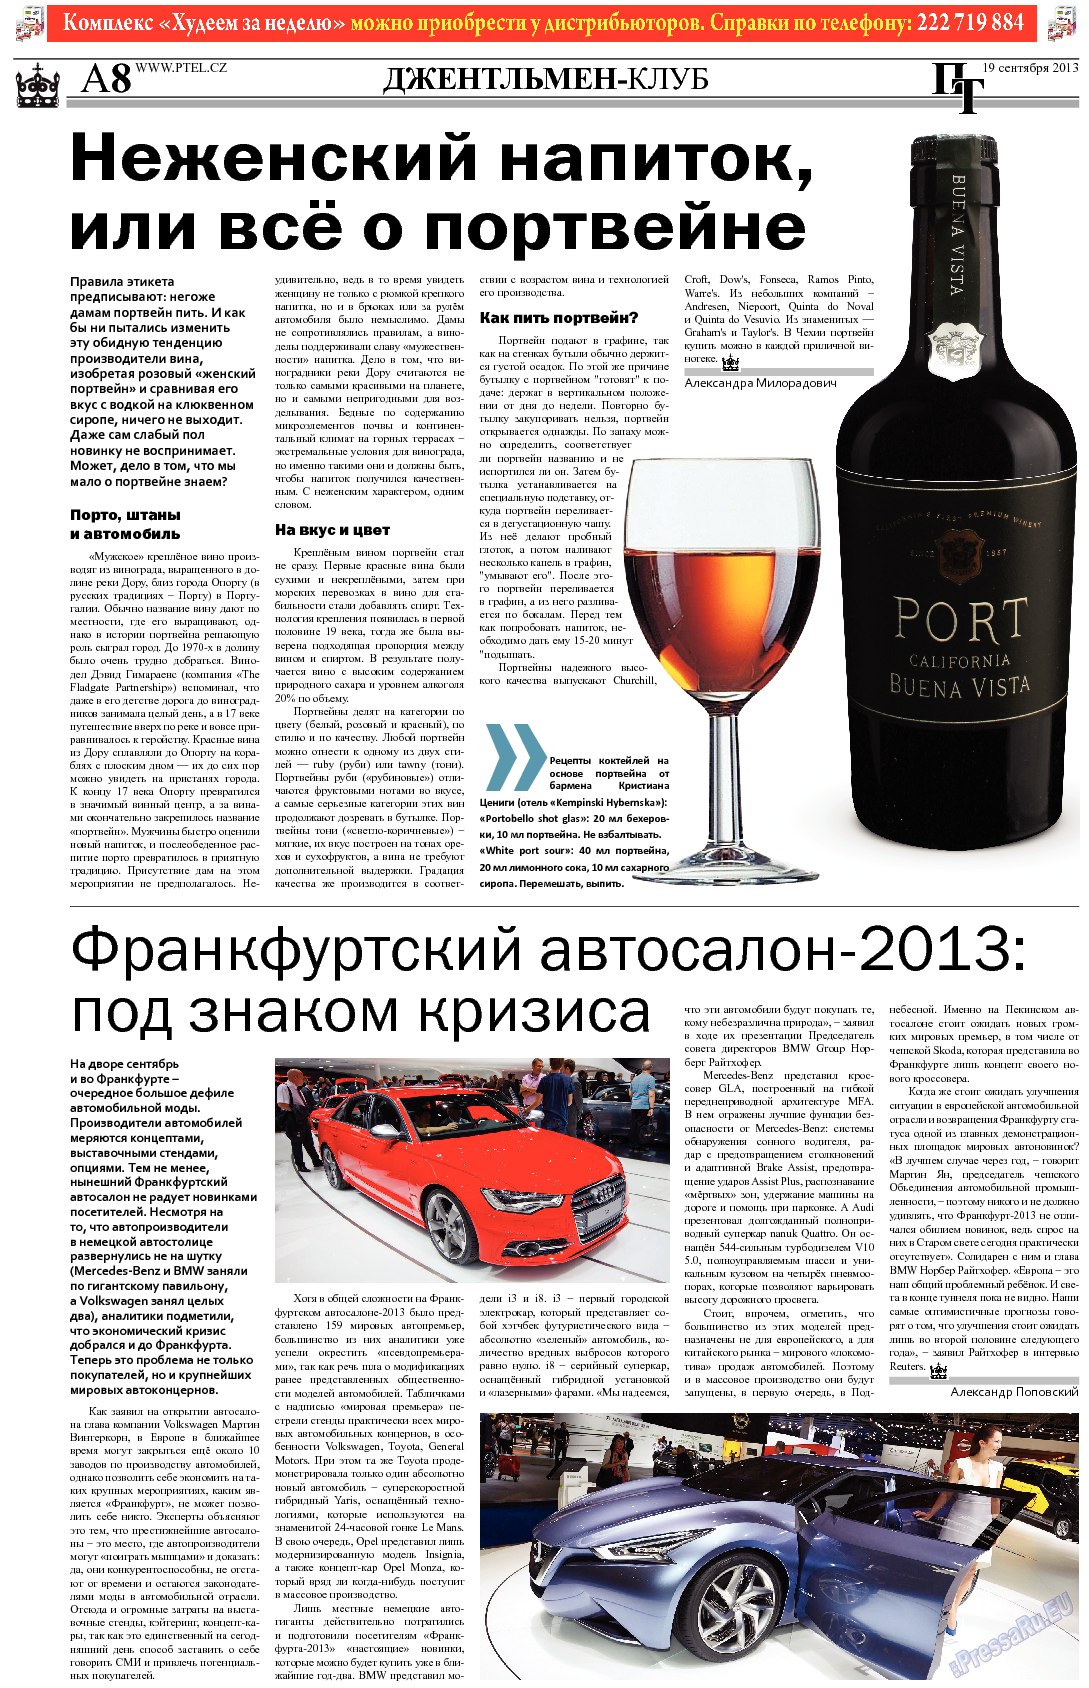 Пражский телеграф, газета. 2013 №37 стр.8